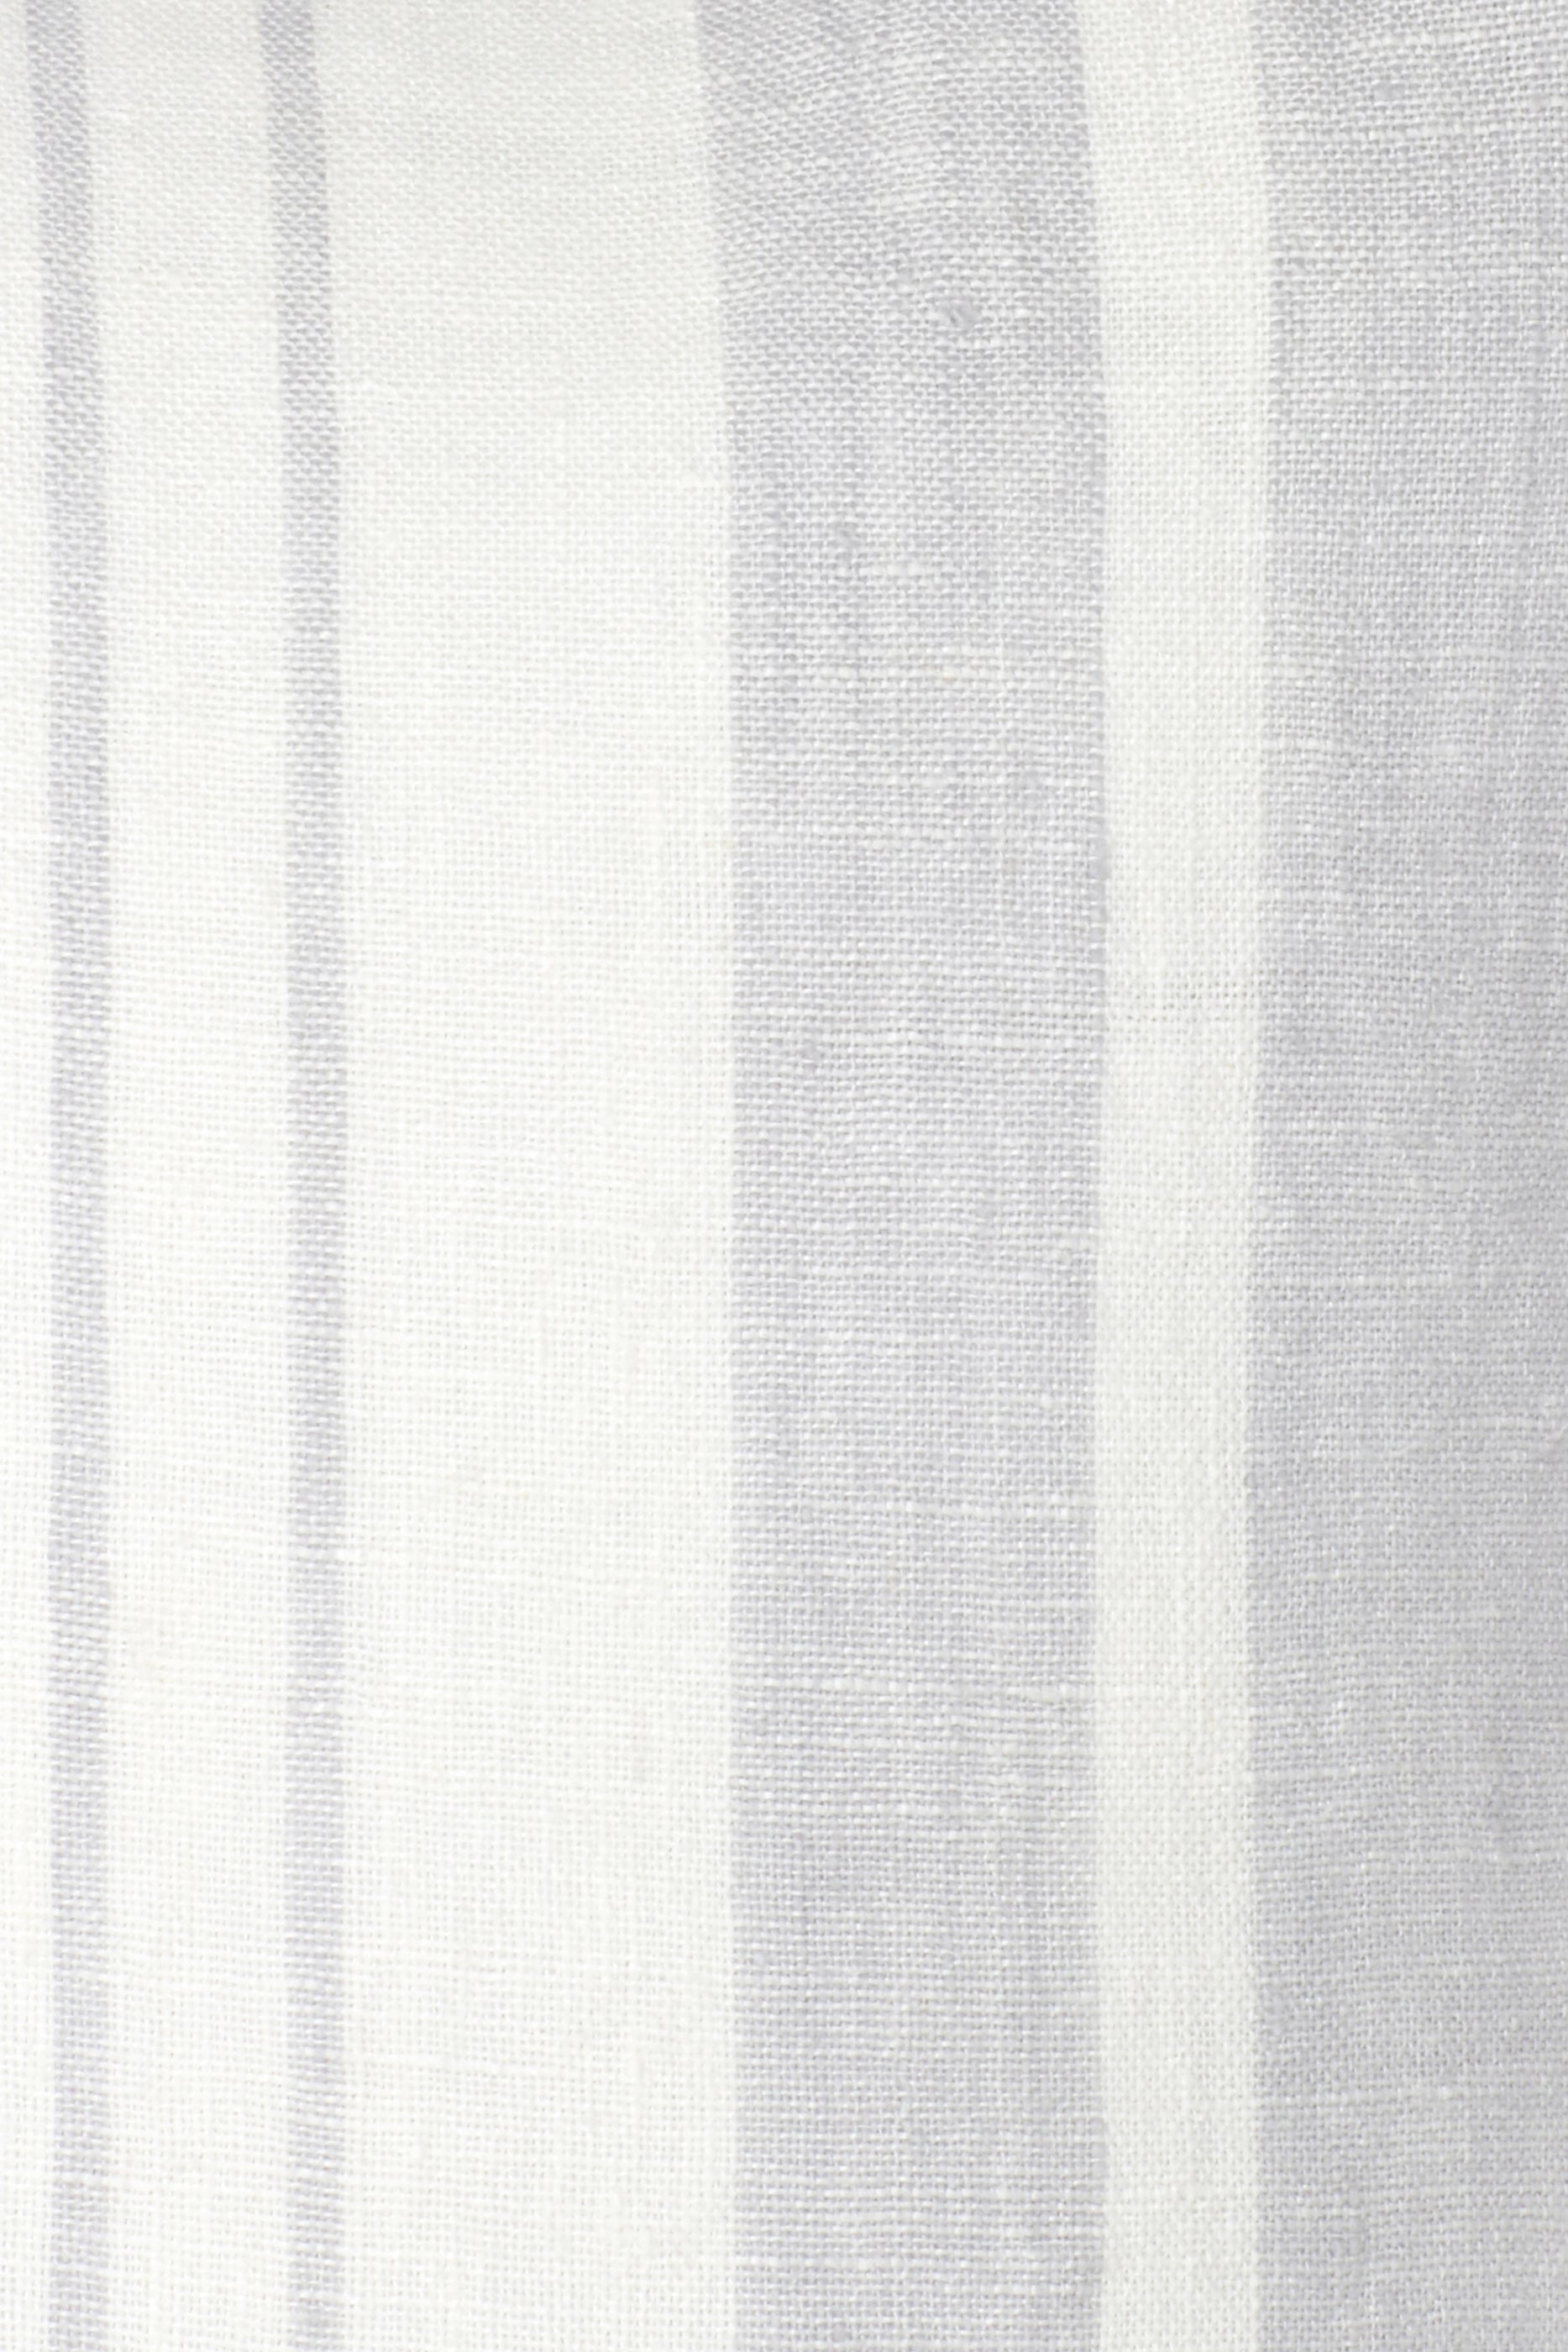 Light Grey Bold Stripes So Soft Linen Pillows